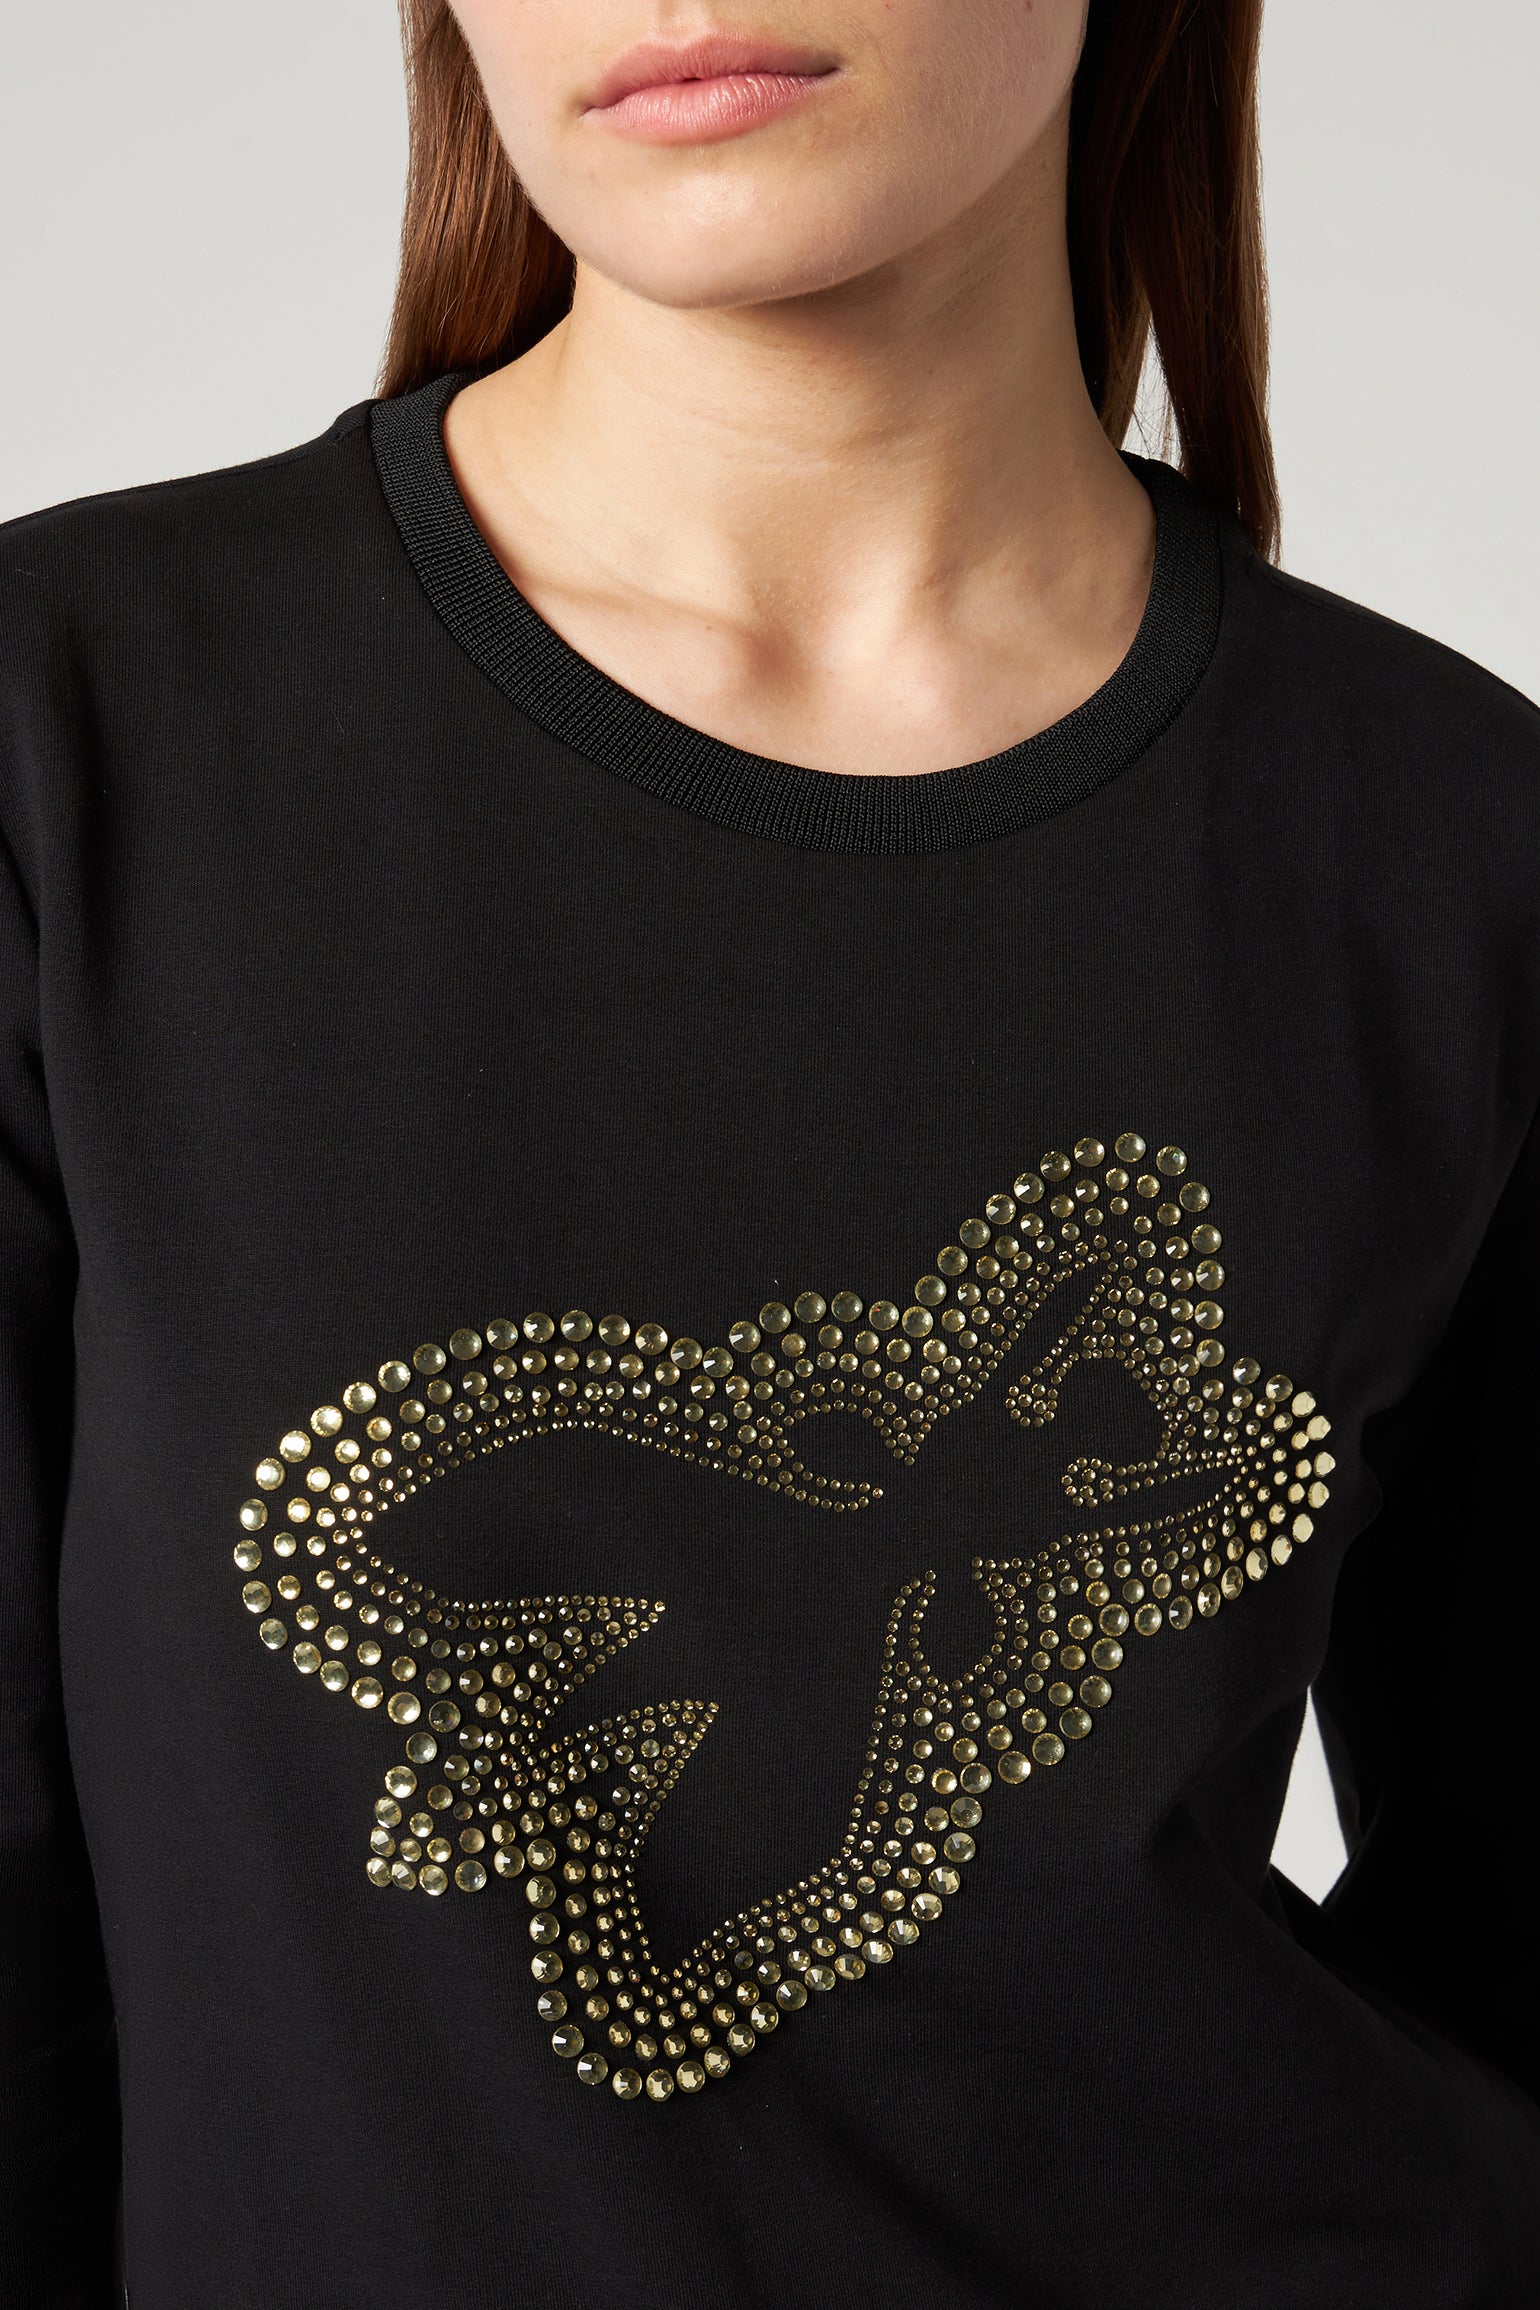 PATRIZIA PEPE Black Sweatshirt with Logo Fly